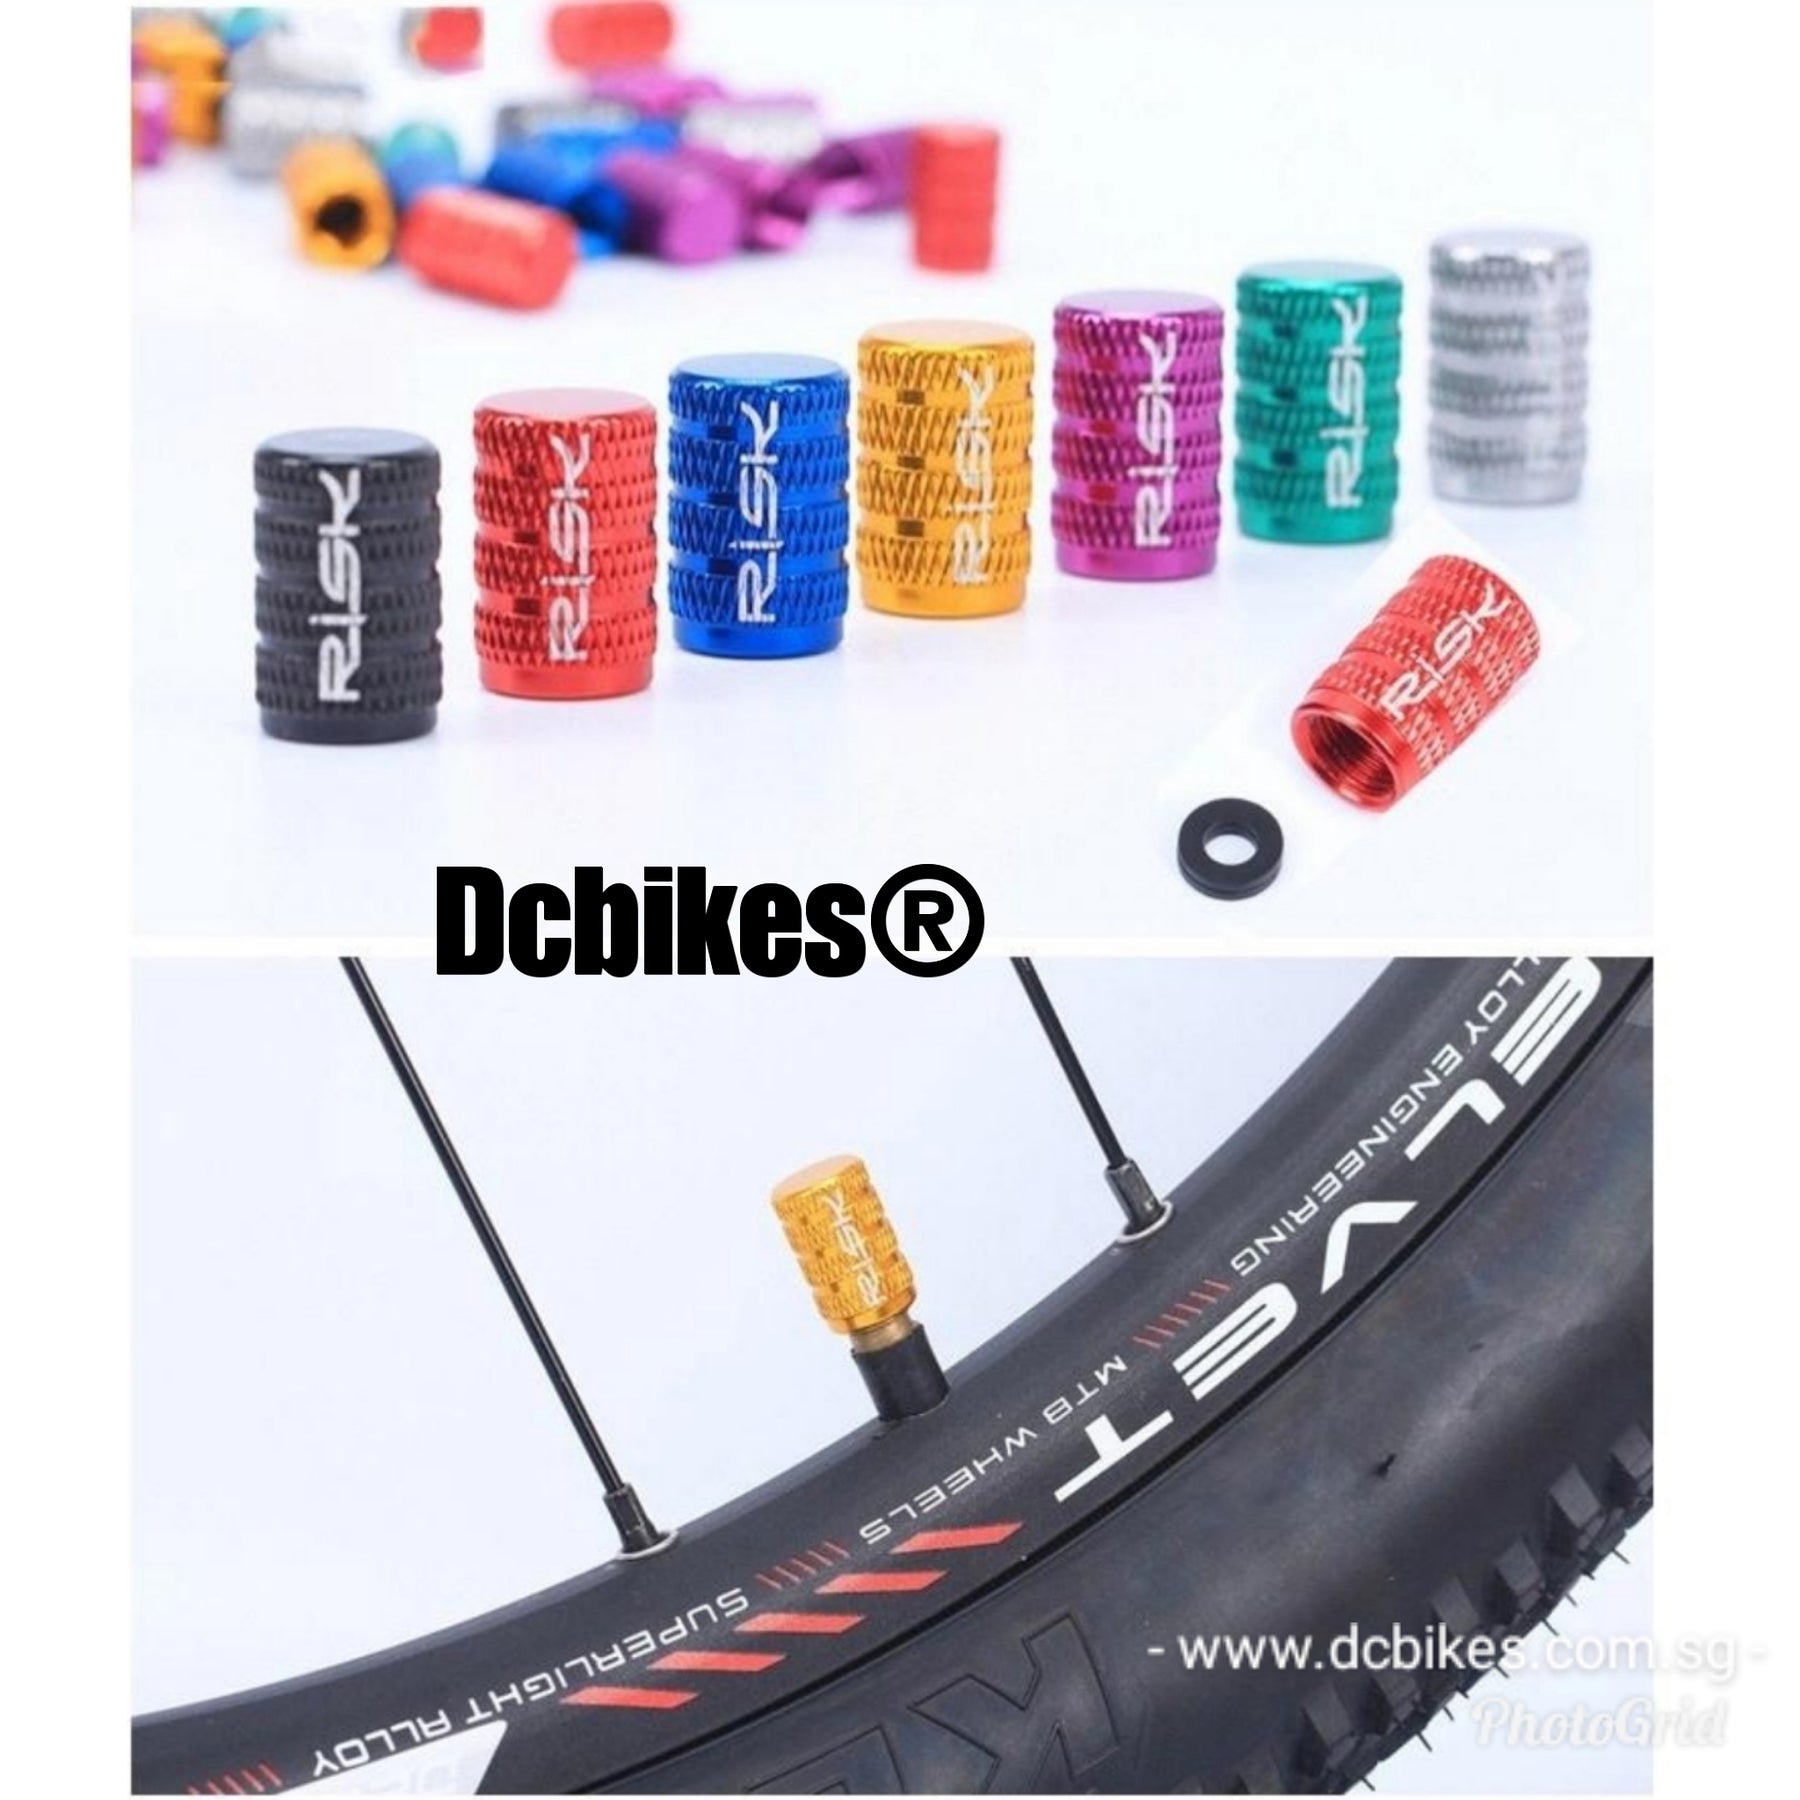 bicycle tyre caps